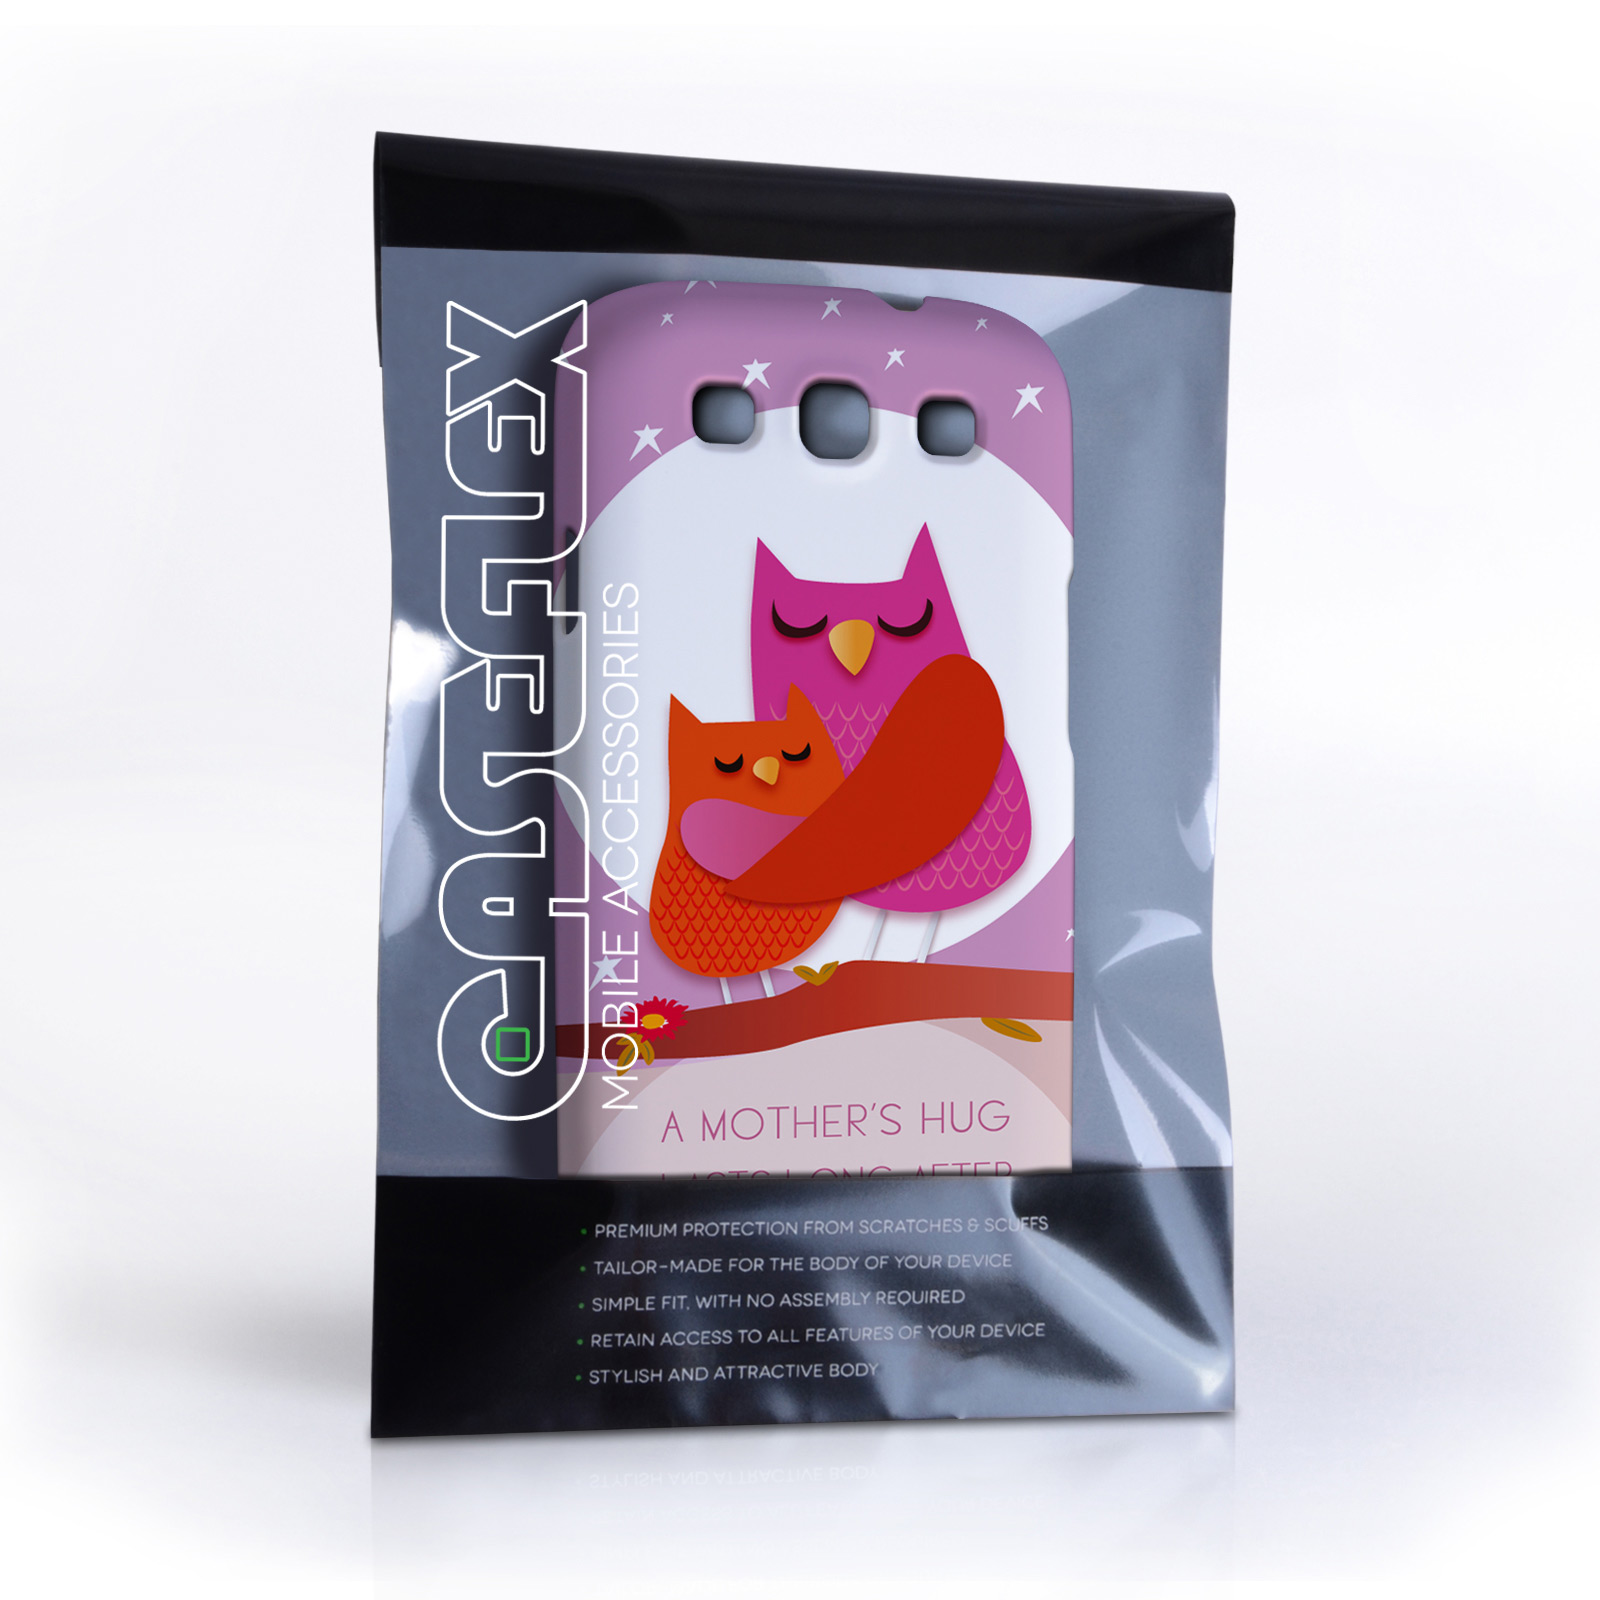 Caseflex Samsung Galaxy S3 Mummy Owl Hard Case – Purple and Pink